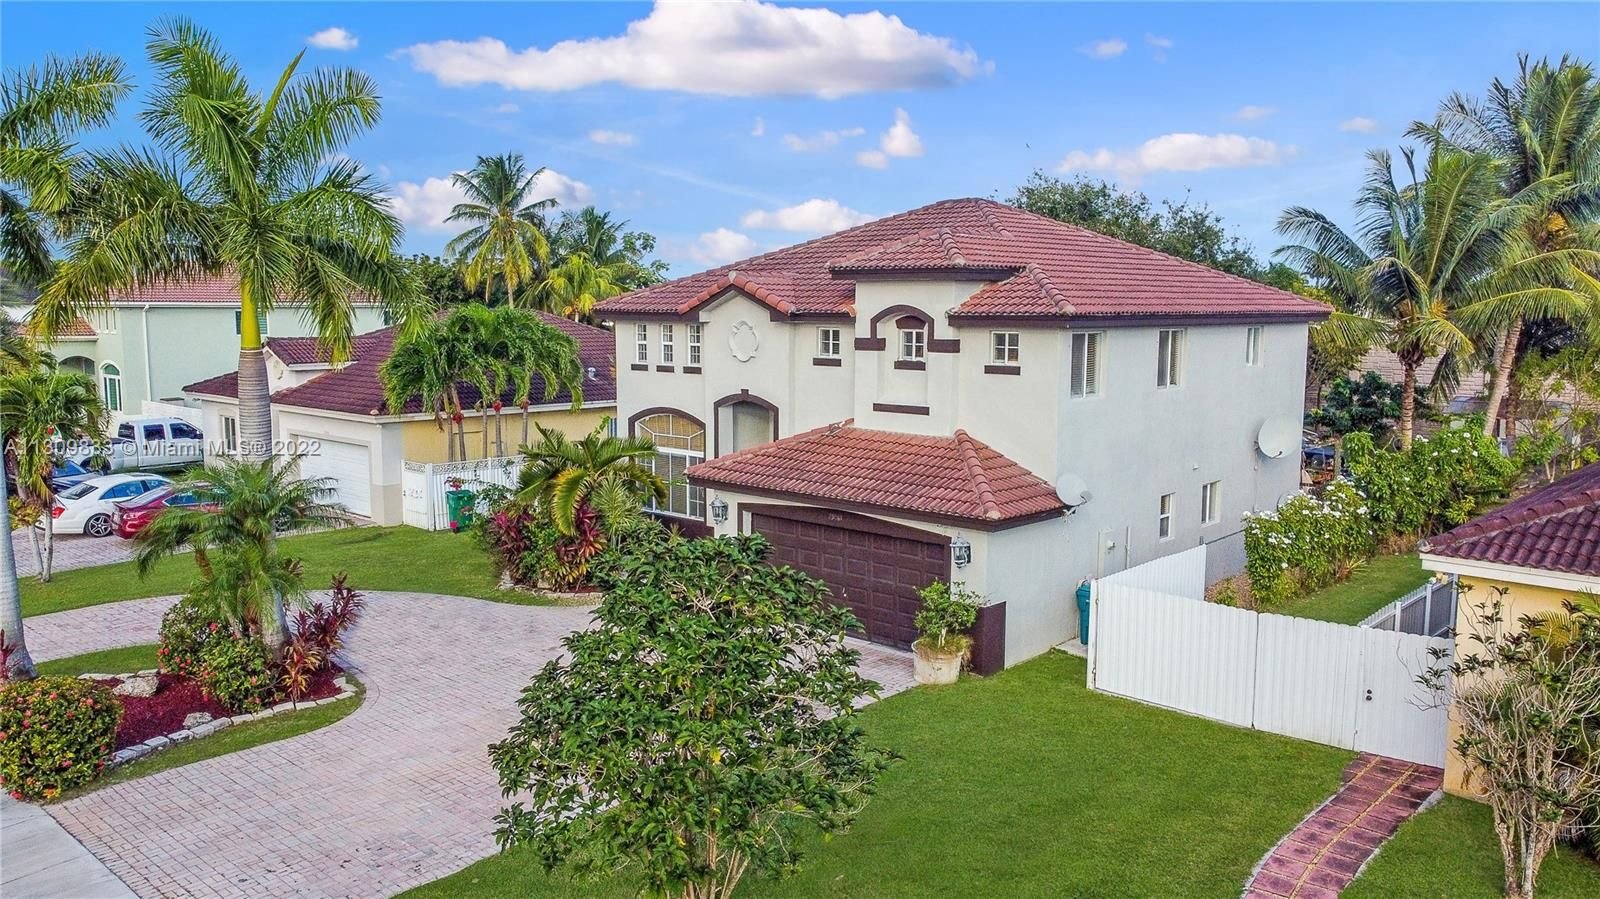 Real estate property located at 23041 107th Ave, Miami-Dade County, Miami, FL